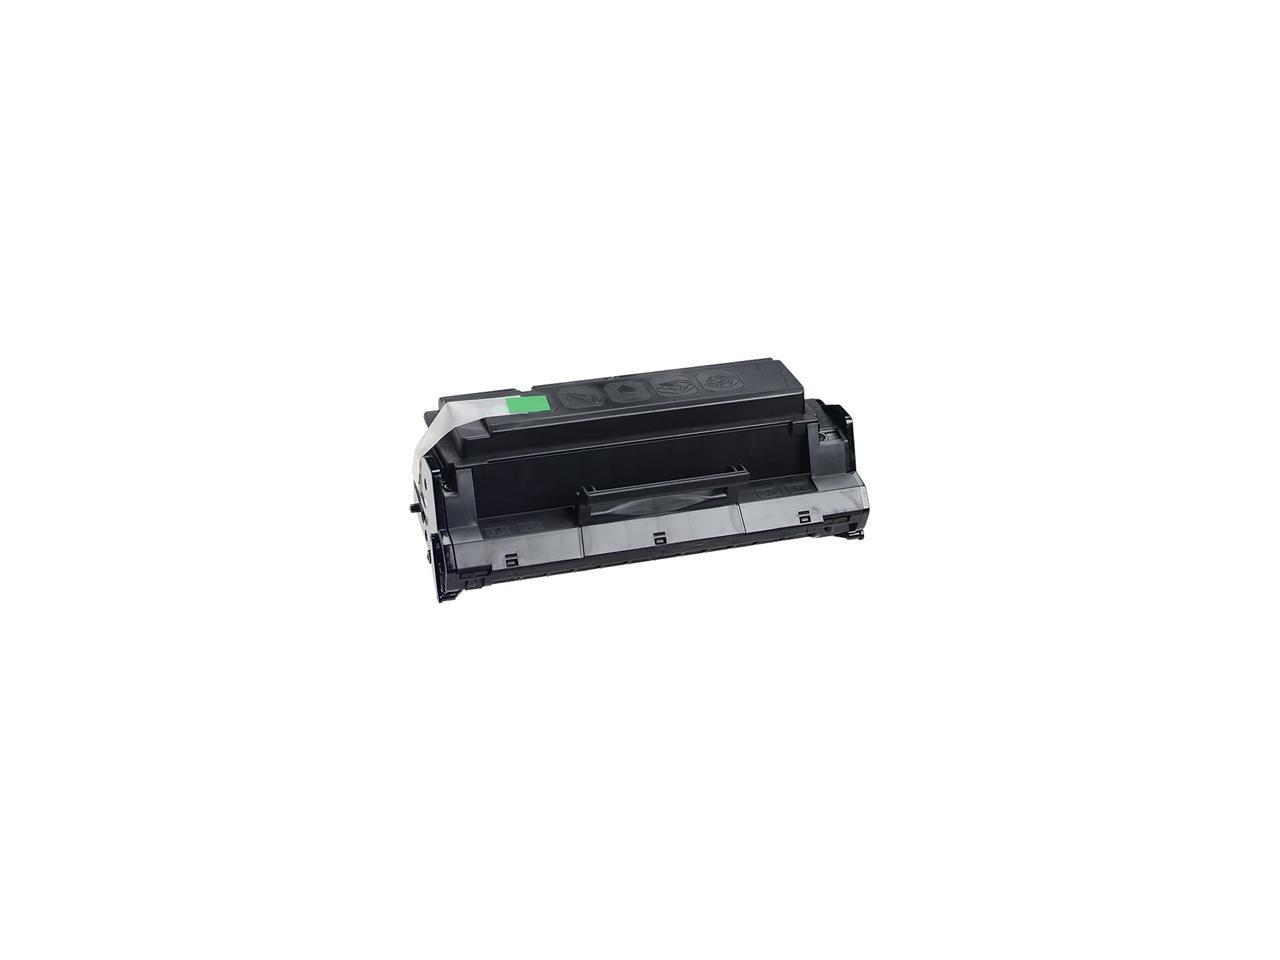 Xerox 113R462 Black Toner Cartridge for XEROX WorkCentre 390 Laser All-in-One